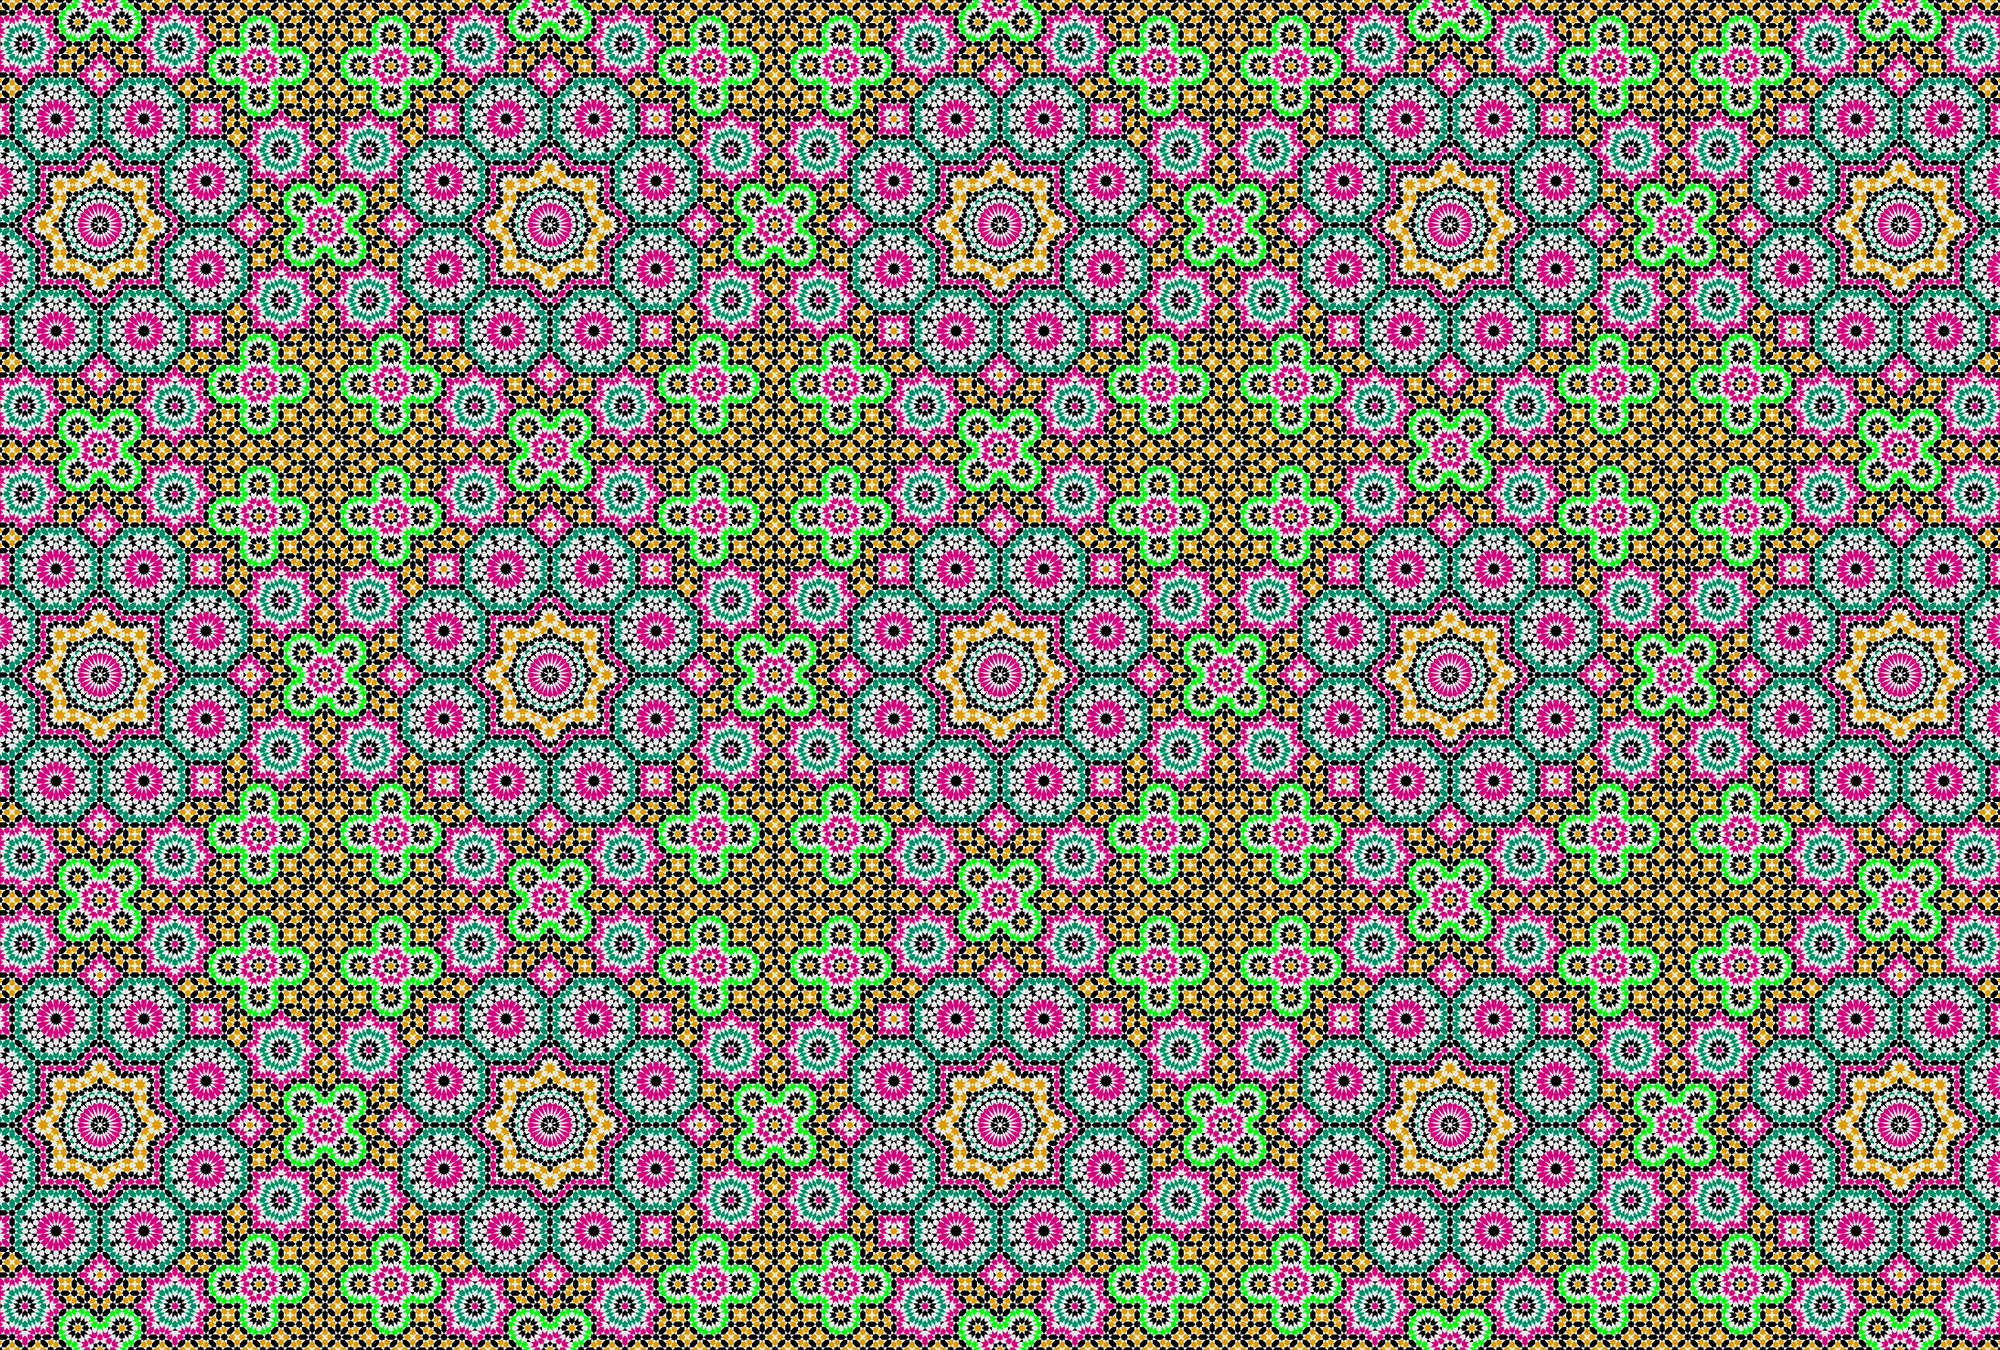             Pattern mural colourful kaleidoscope - yellow, pink
        